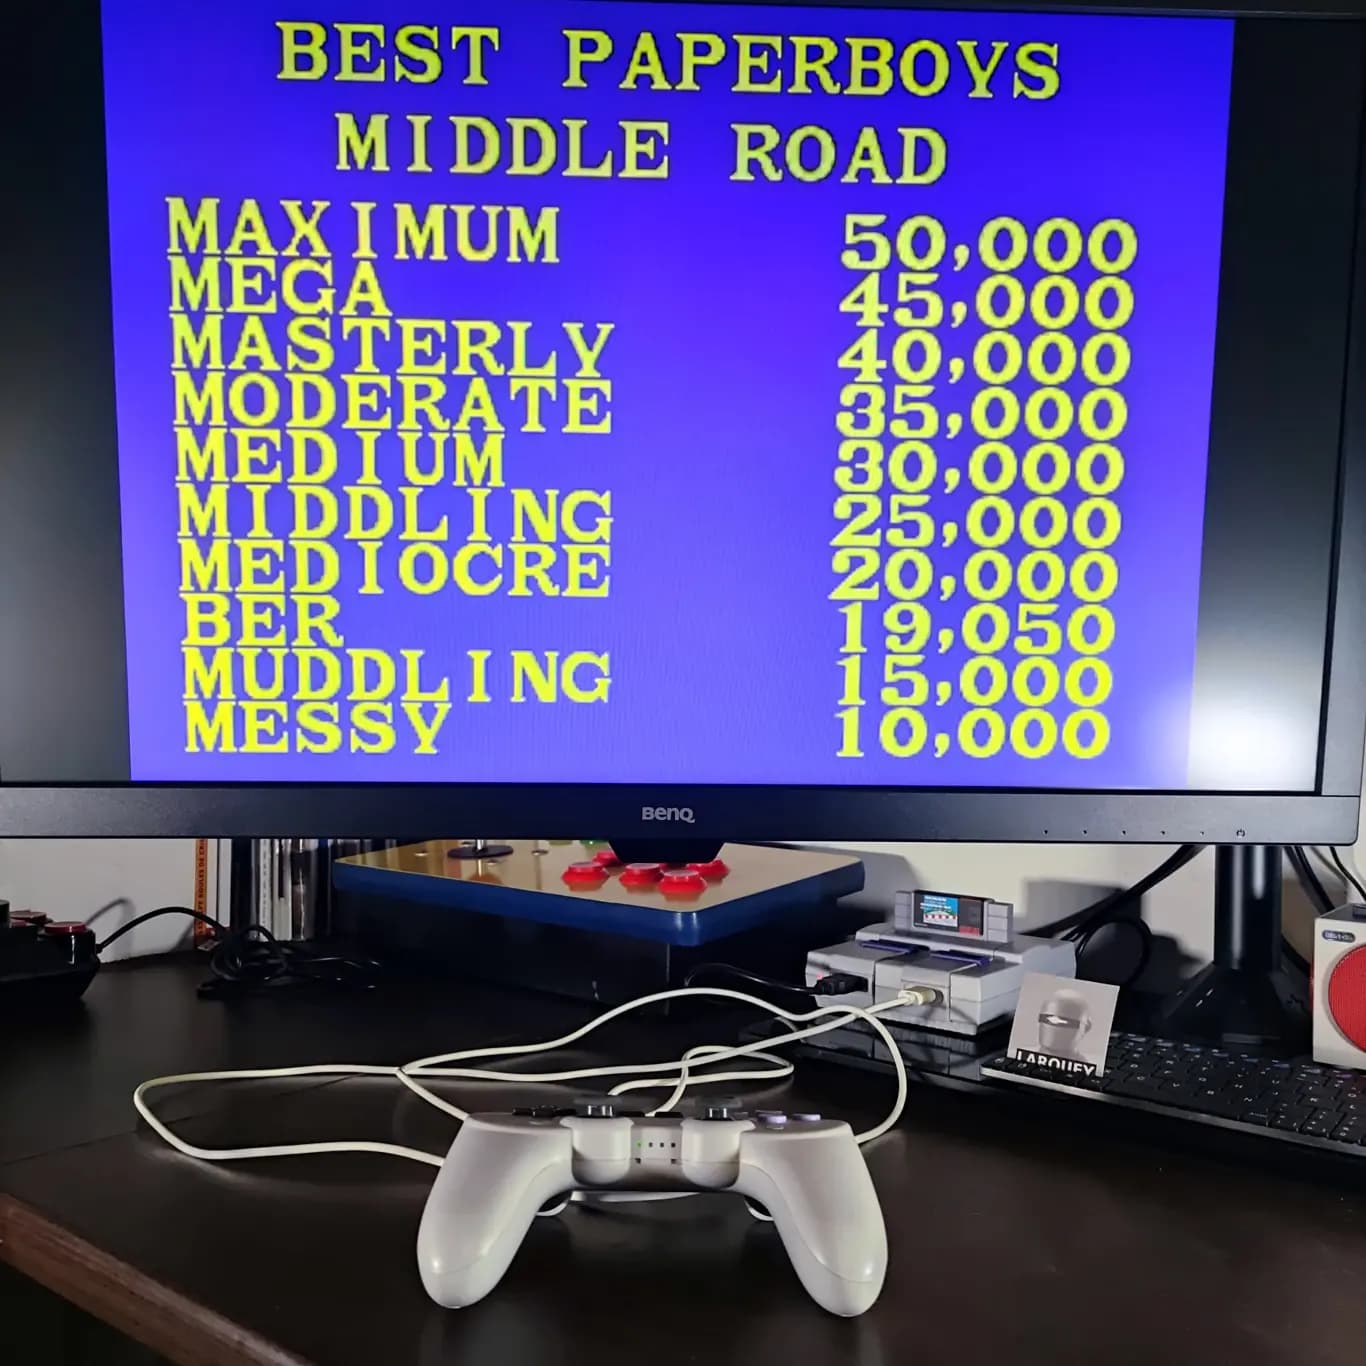 Larquey: Paper Boy: Middle Road [Medium] (Sega Genesis / MegaDrive Emulated) 19,050 points on 2022-09-24 10:50:08